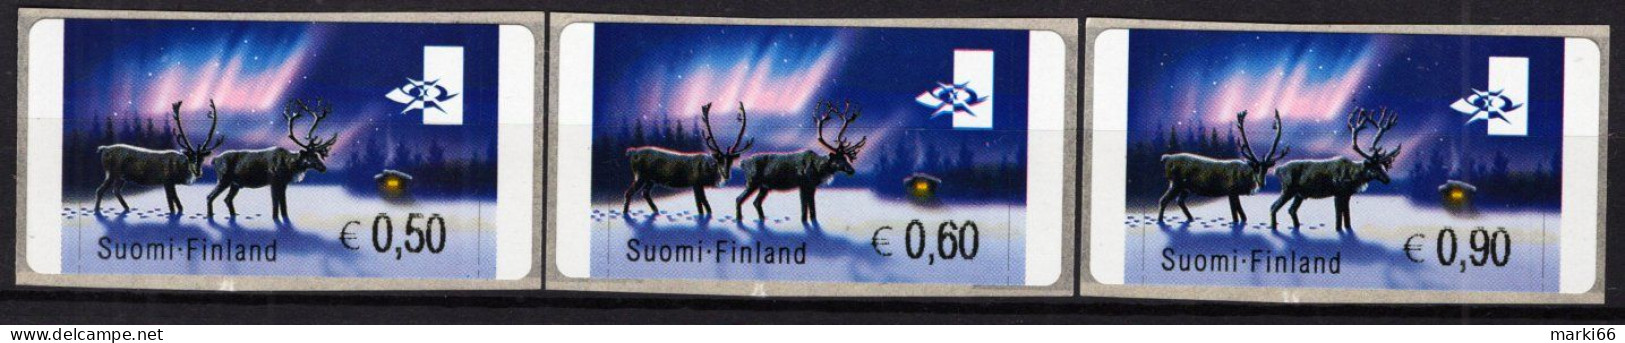 Finland - 2002 - Christmas - Northern Lights And Reindeers - Mint ATM Self-adhesive Stamp Set (EUR) - Viñetas De Franqueo [ATM]